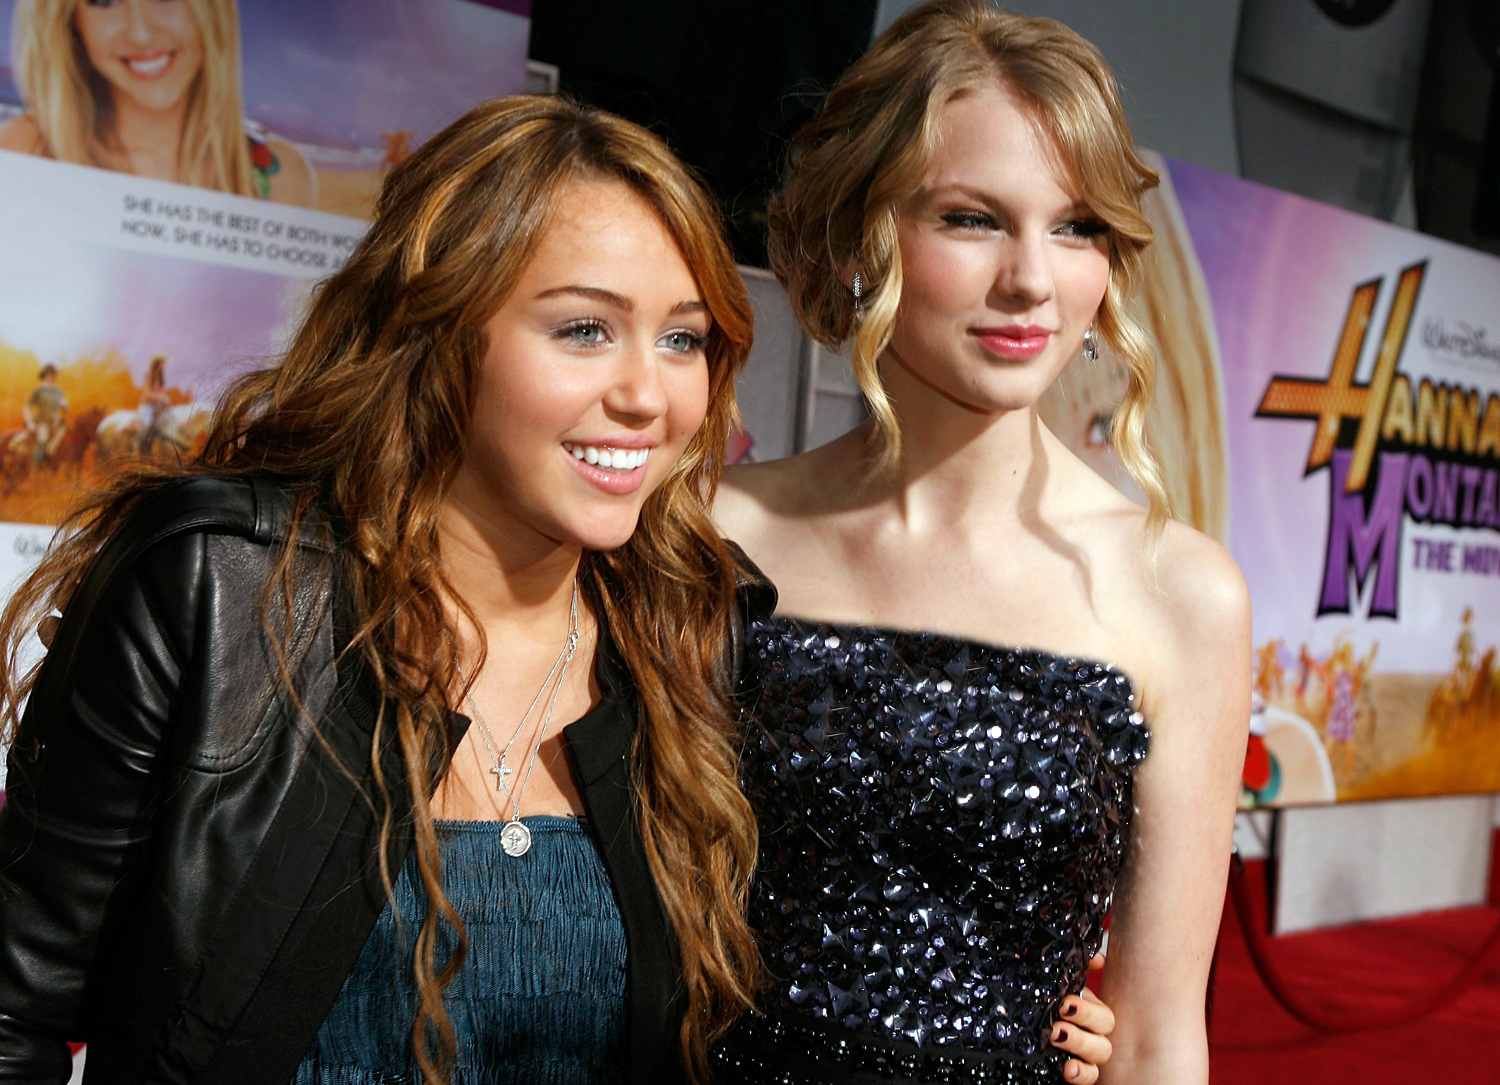 Swift leads winners but West, Cyrus rule MTV Video Music Awards